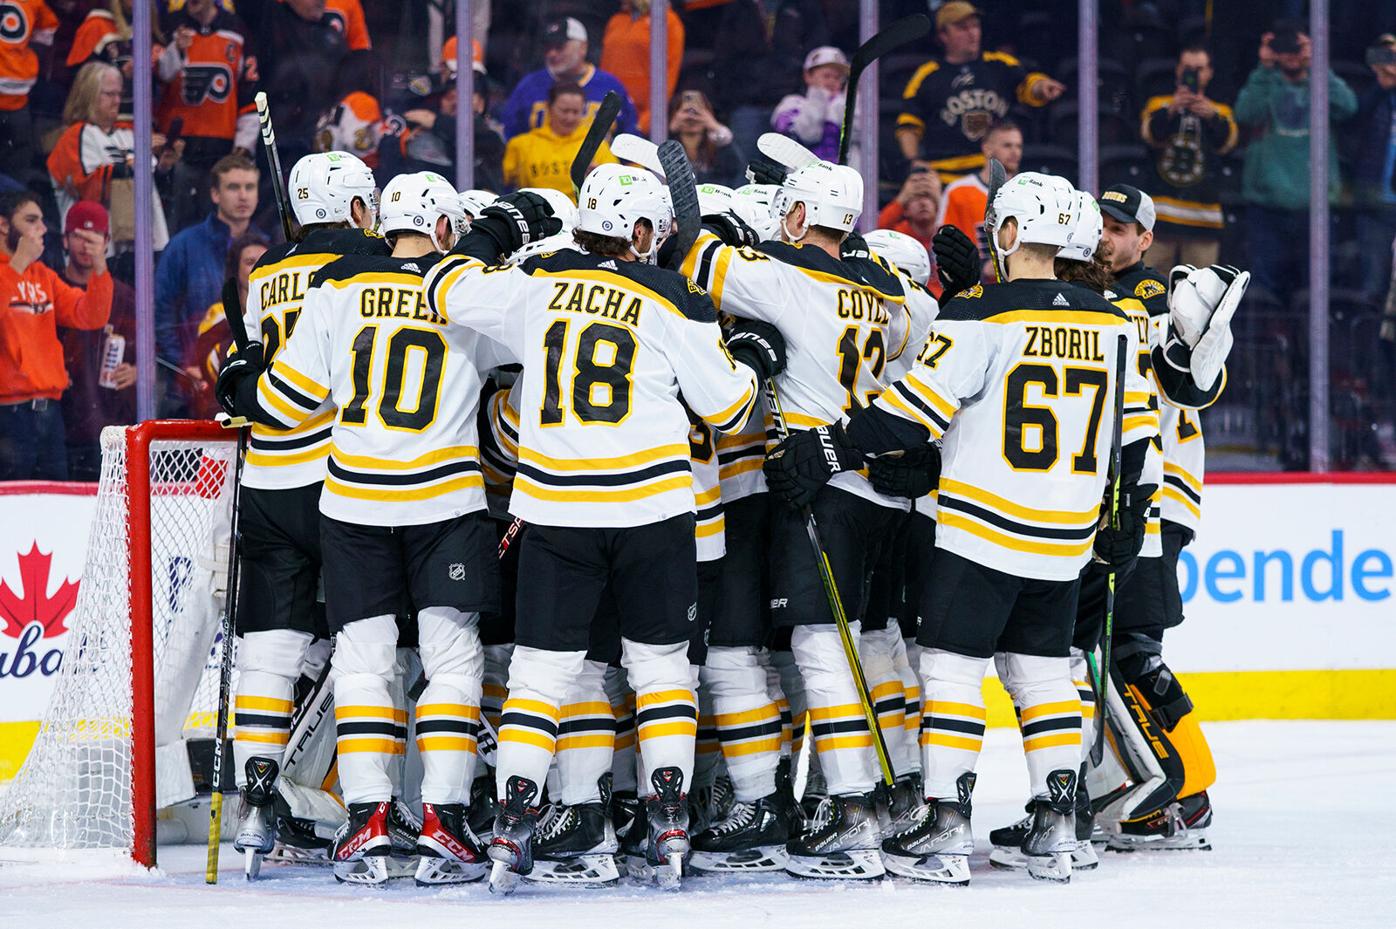 Historic Bruins stunned in Boston